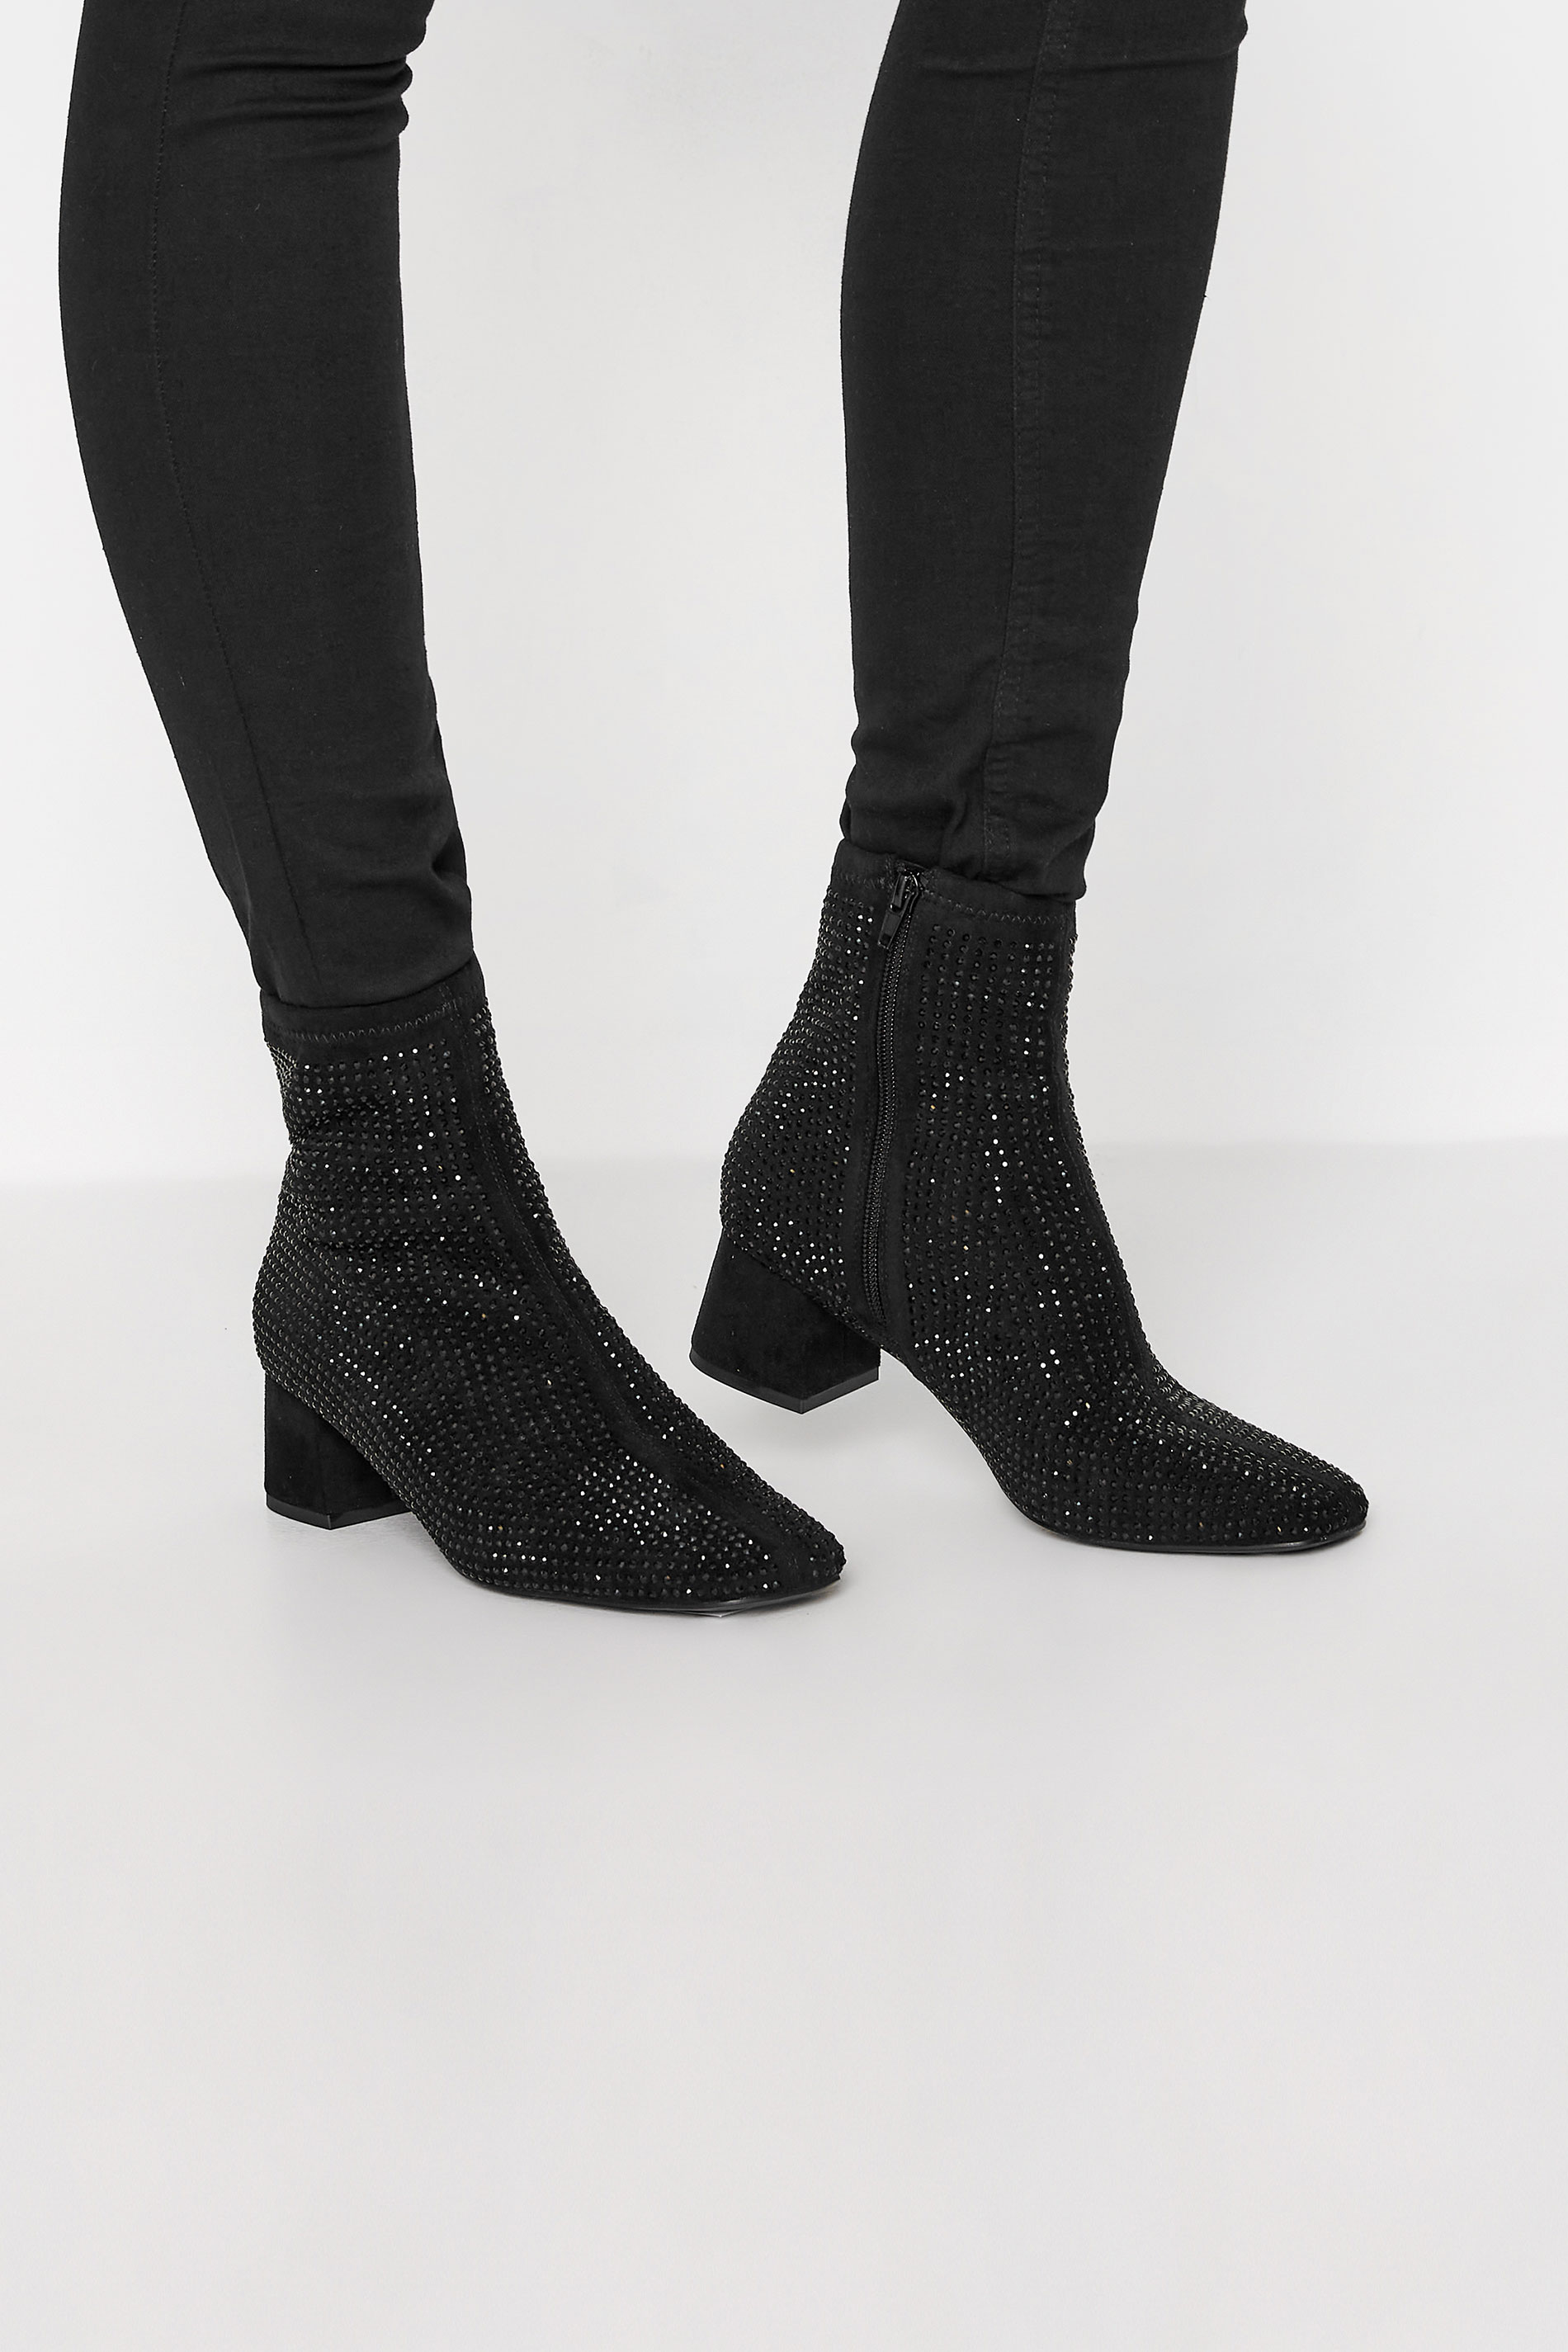 LTS Black Diamante Block Heel Boots In Standard Fit | Long Tall Sally 1